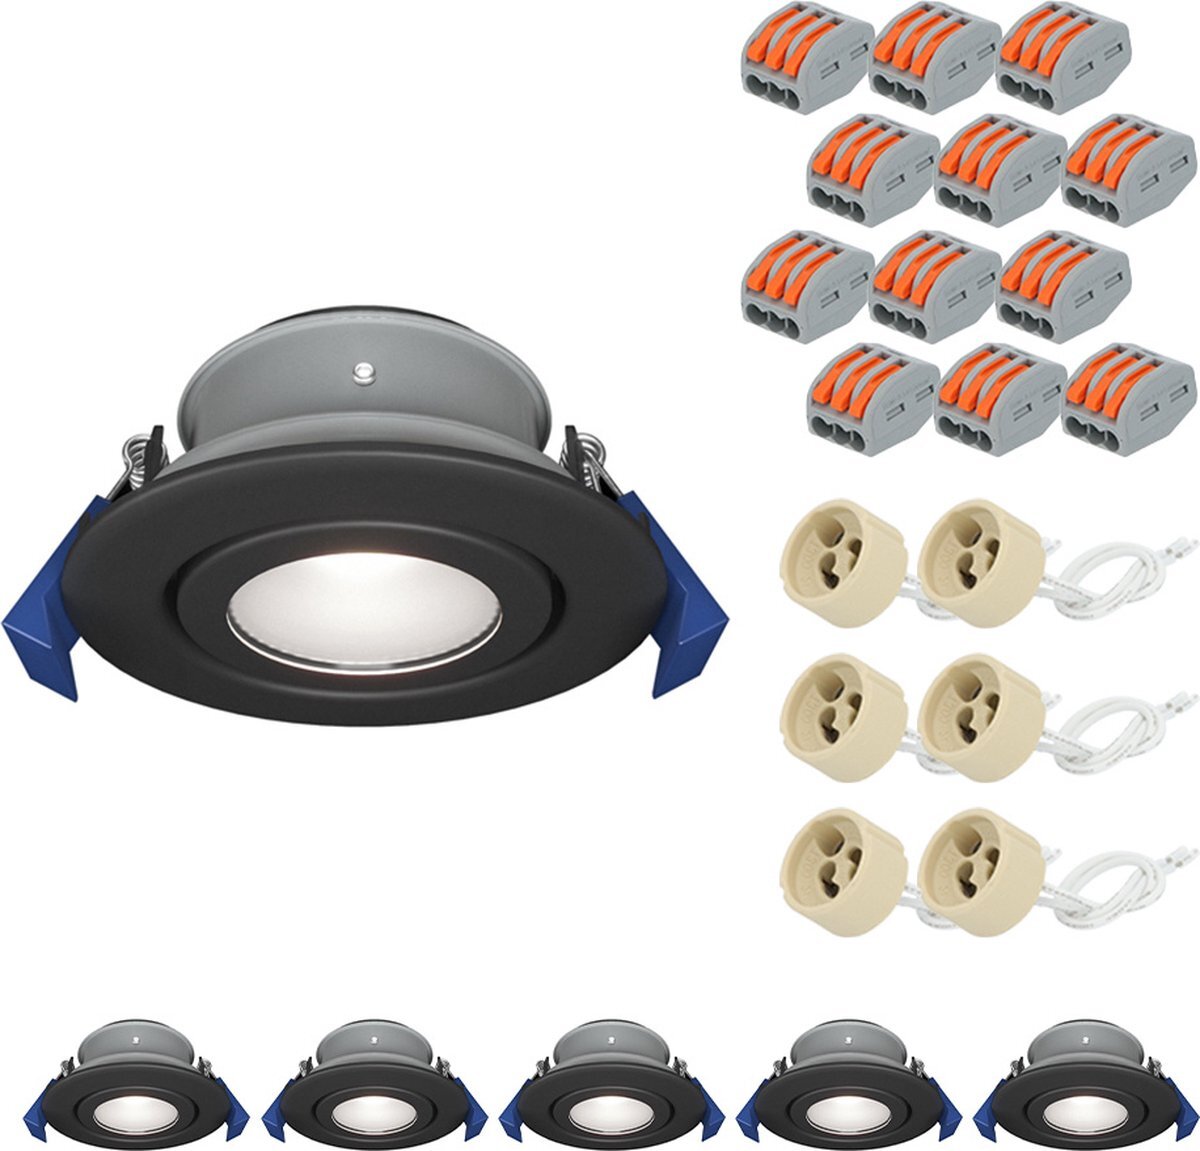 HOFTRONIC Set van 6 Peru LED inbouwspots - Kantelbaar armatuur - GU10 fitting - IP65 waterdicht - LED inbouwspot badkamer en buiten - Zwart